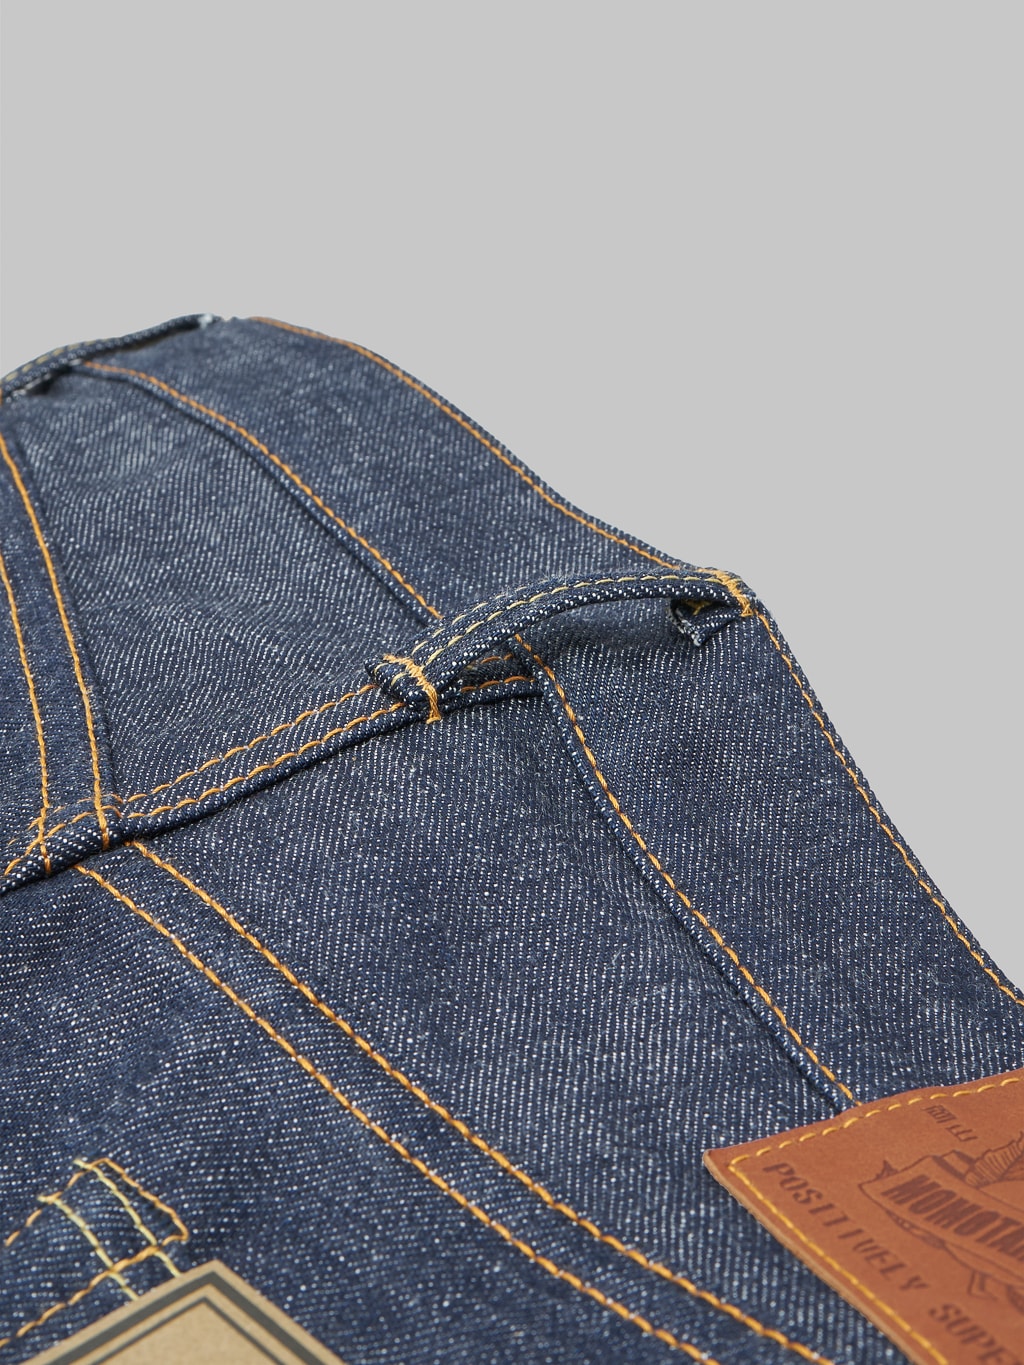 Momotaro legacy blue high tapered jeans raised belt loop